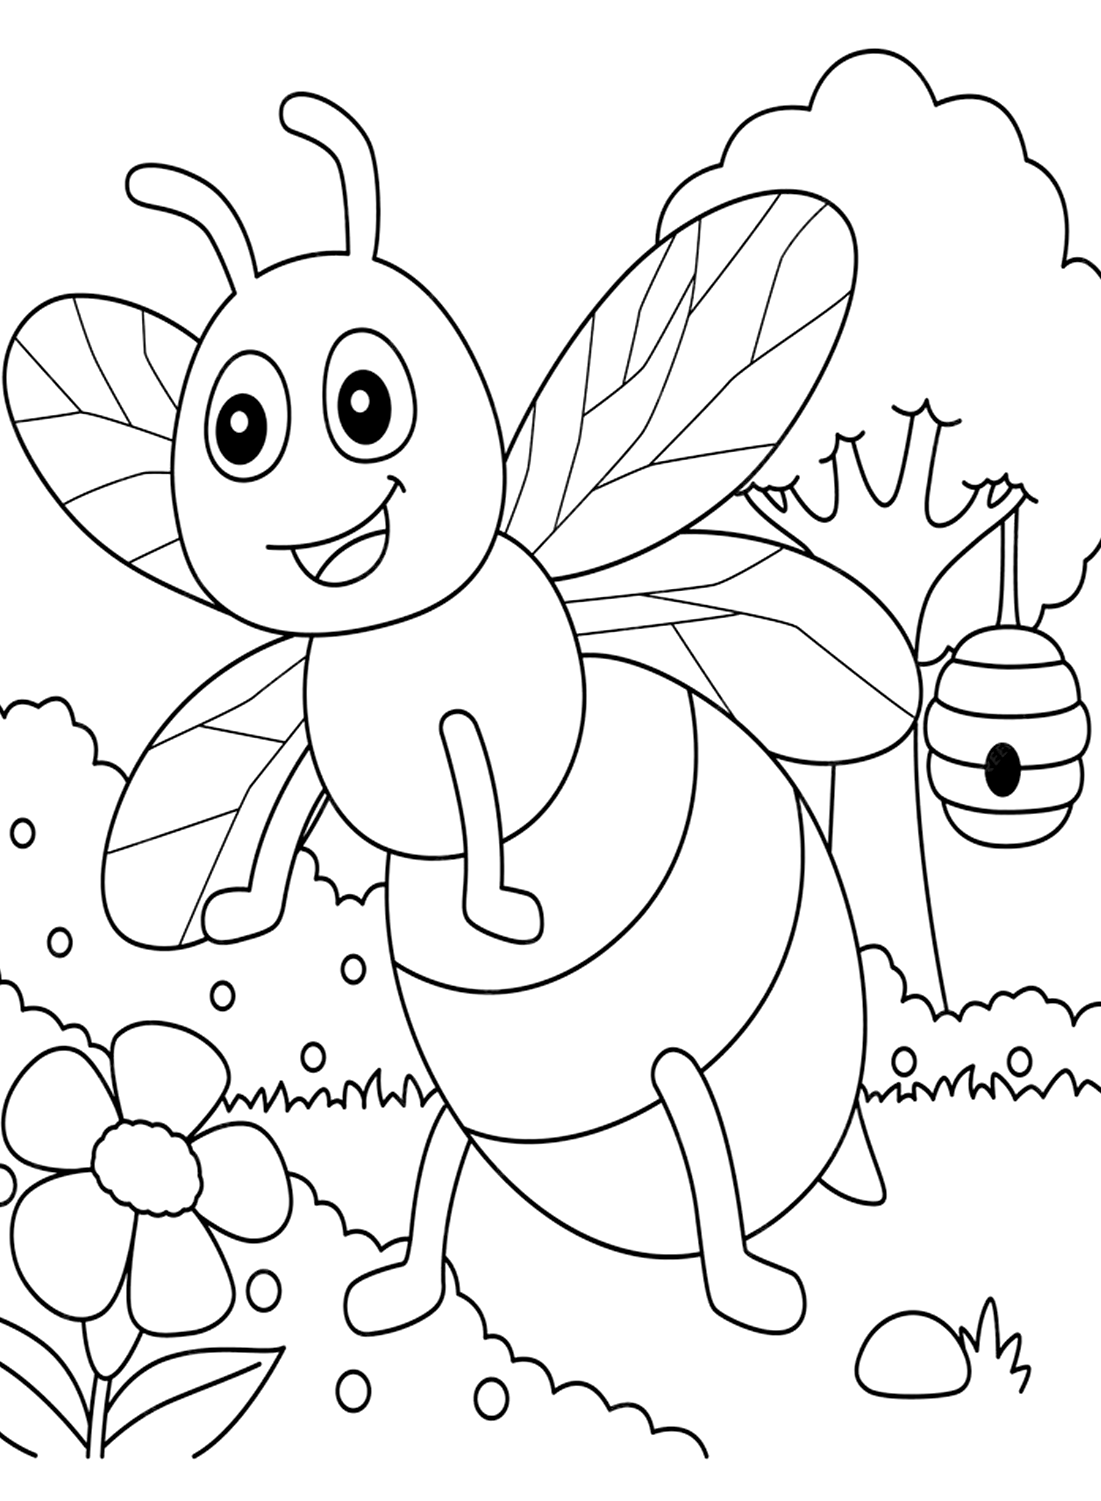 Imagens para colorir de abelhas de Bee